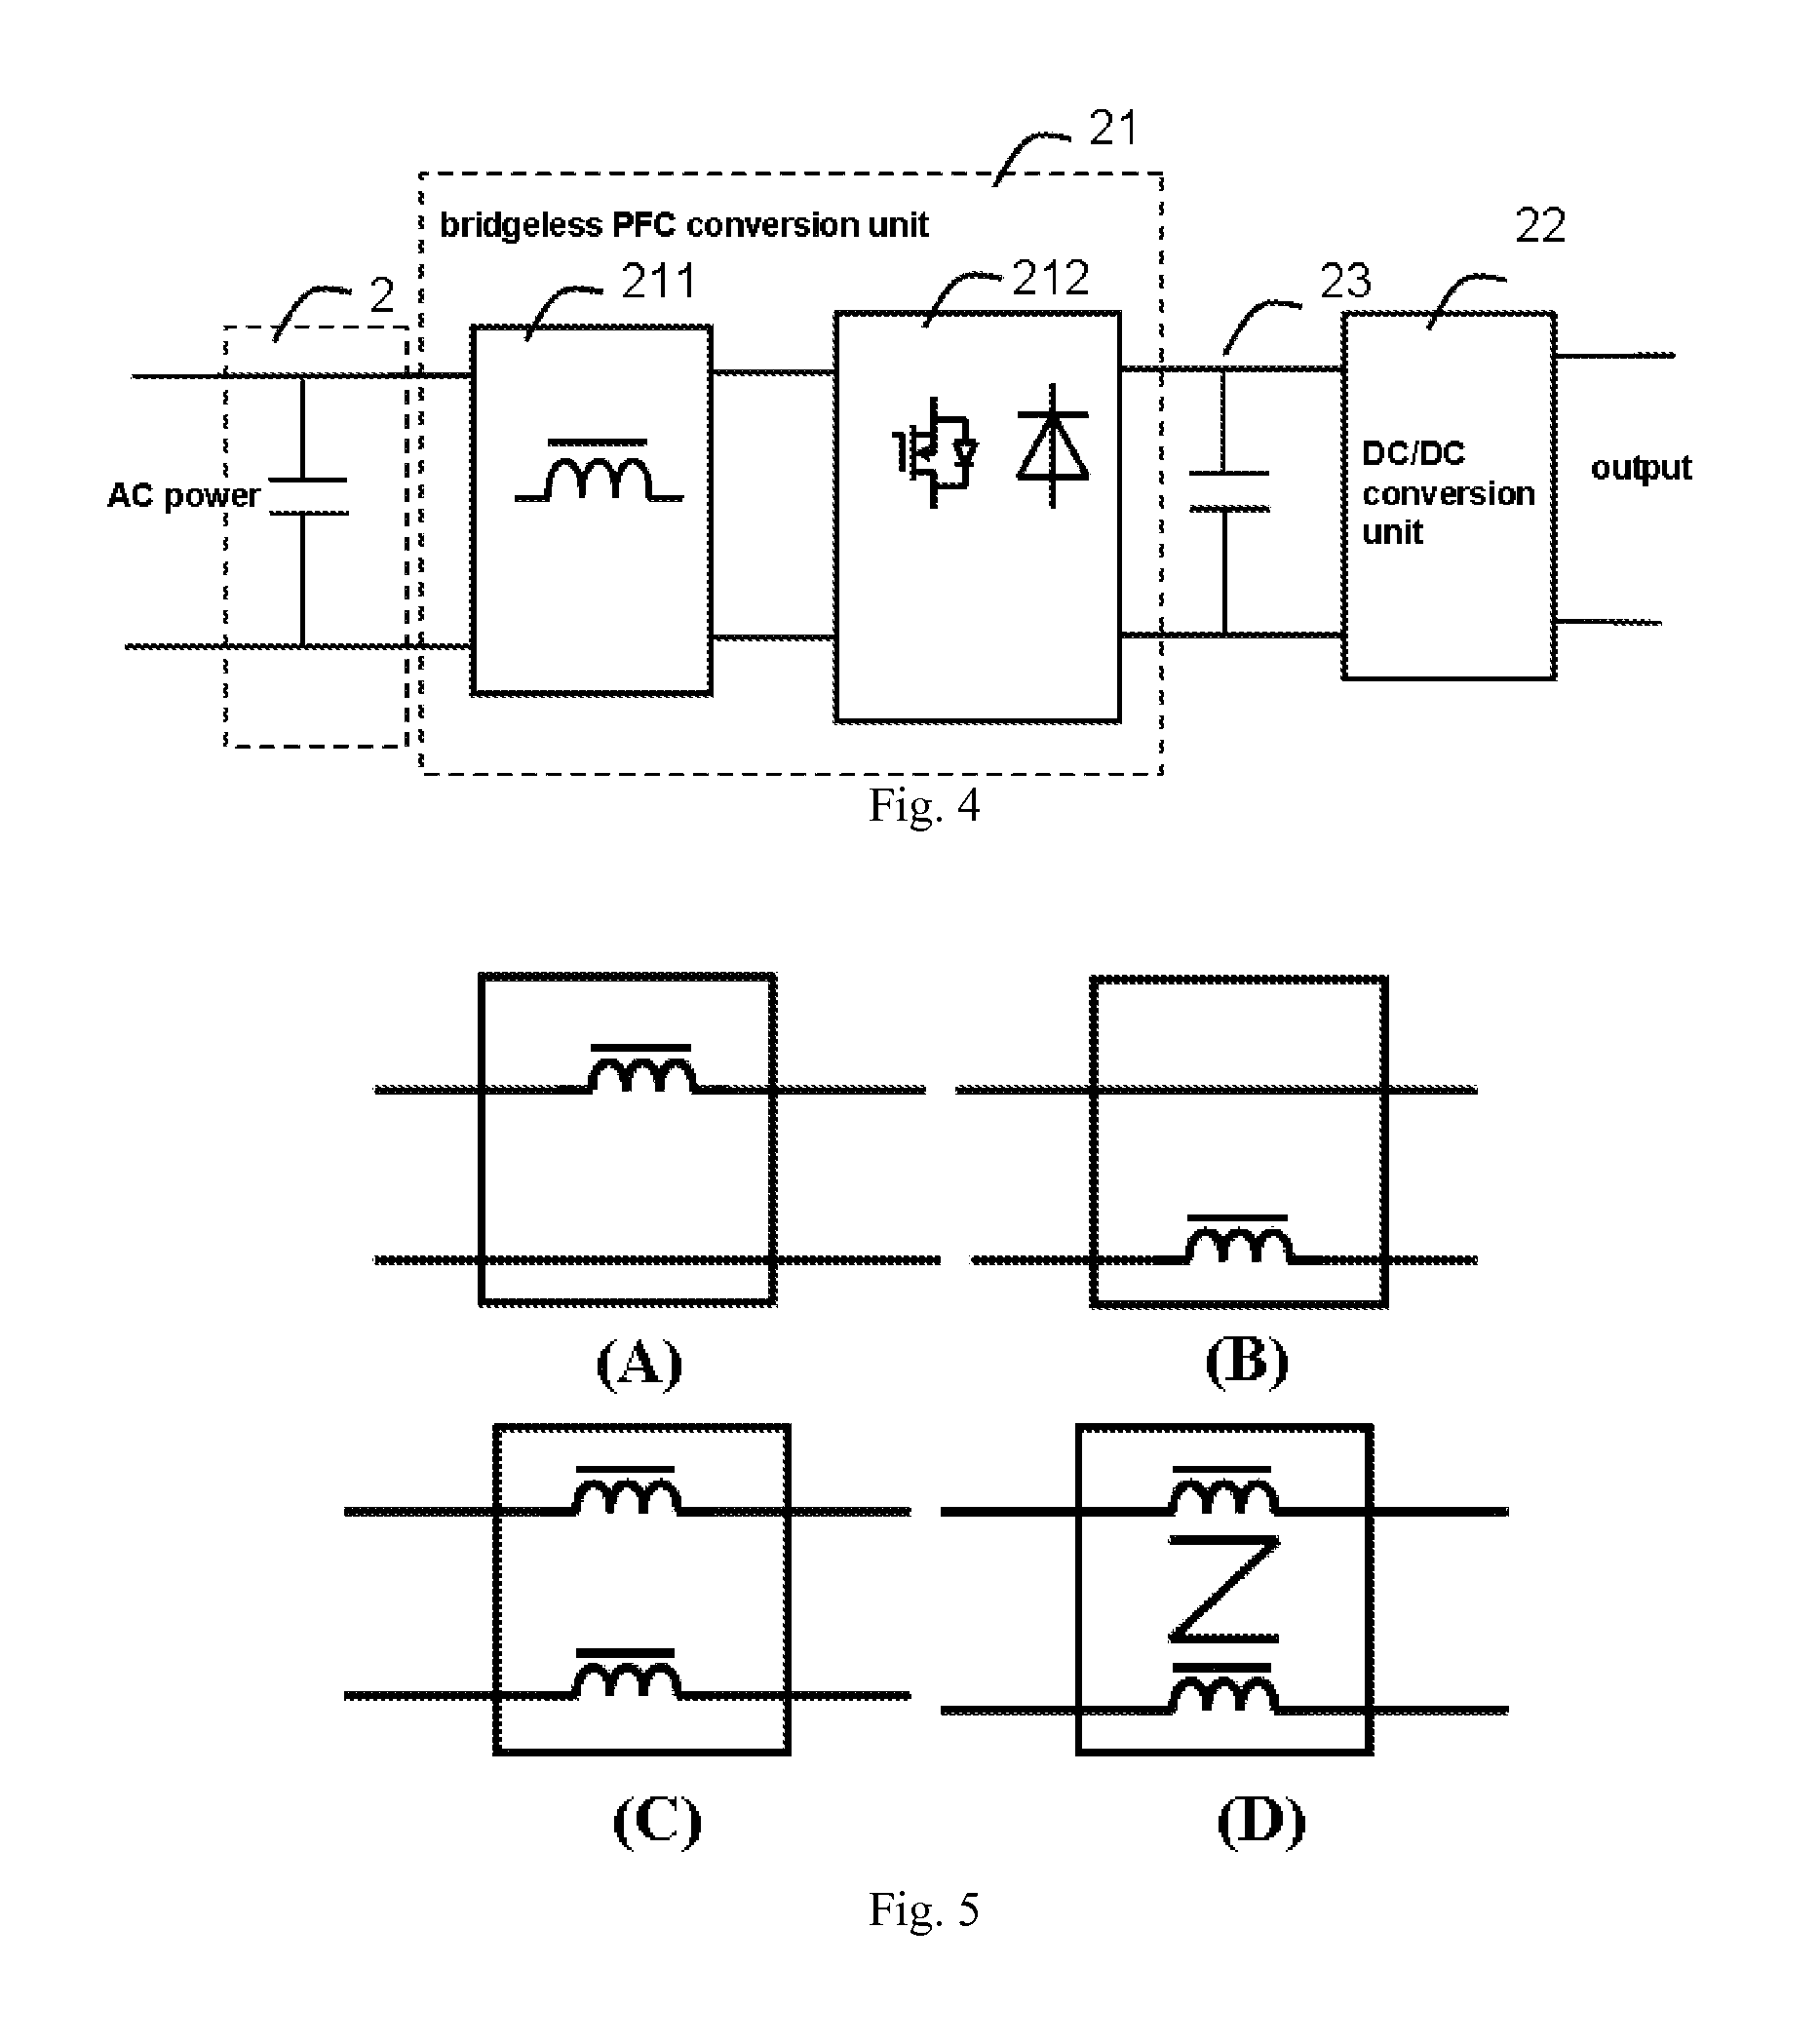 Capacitor discharging circuit and power converter